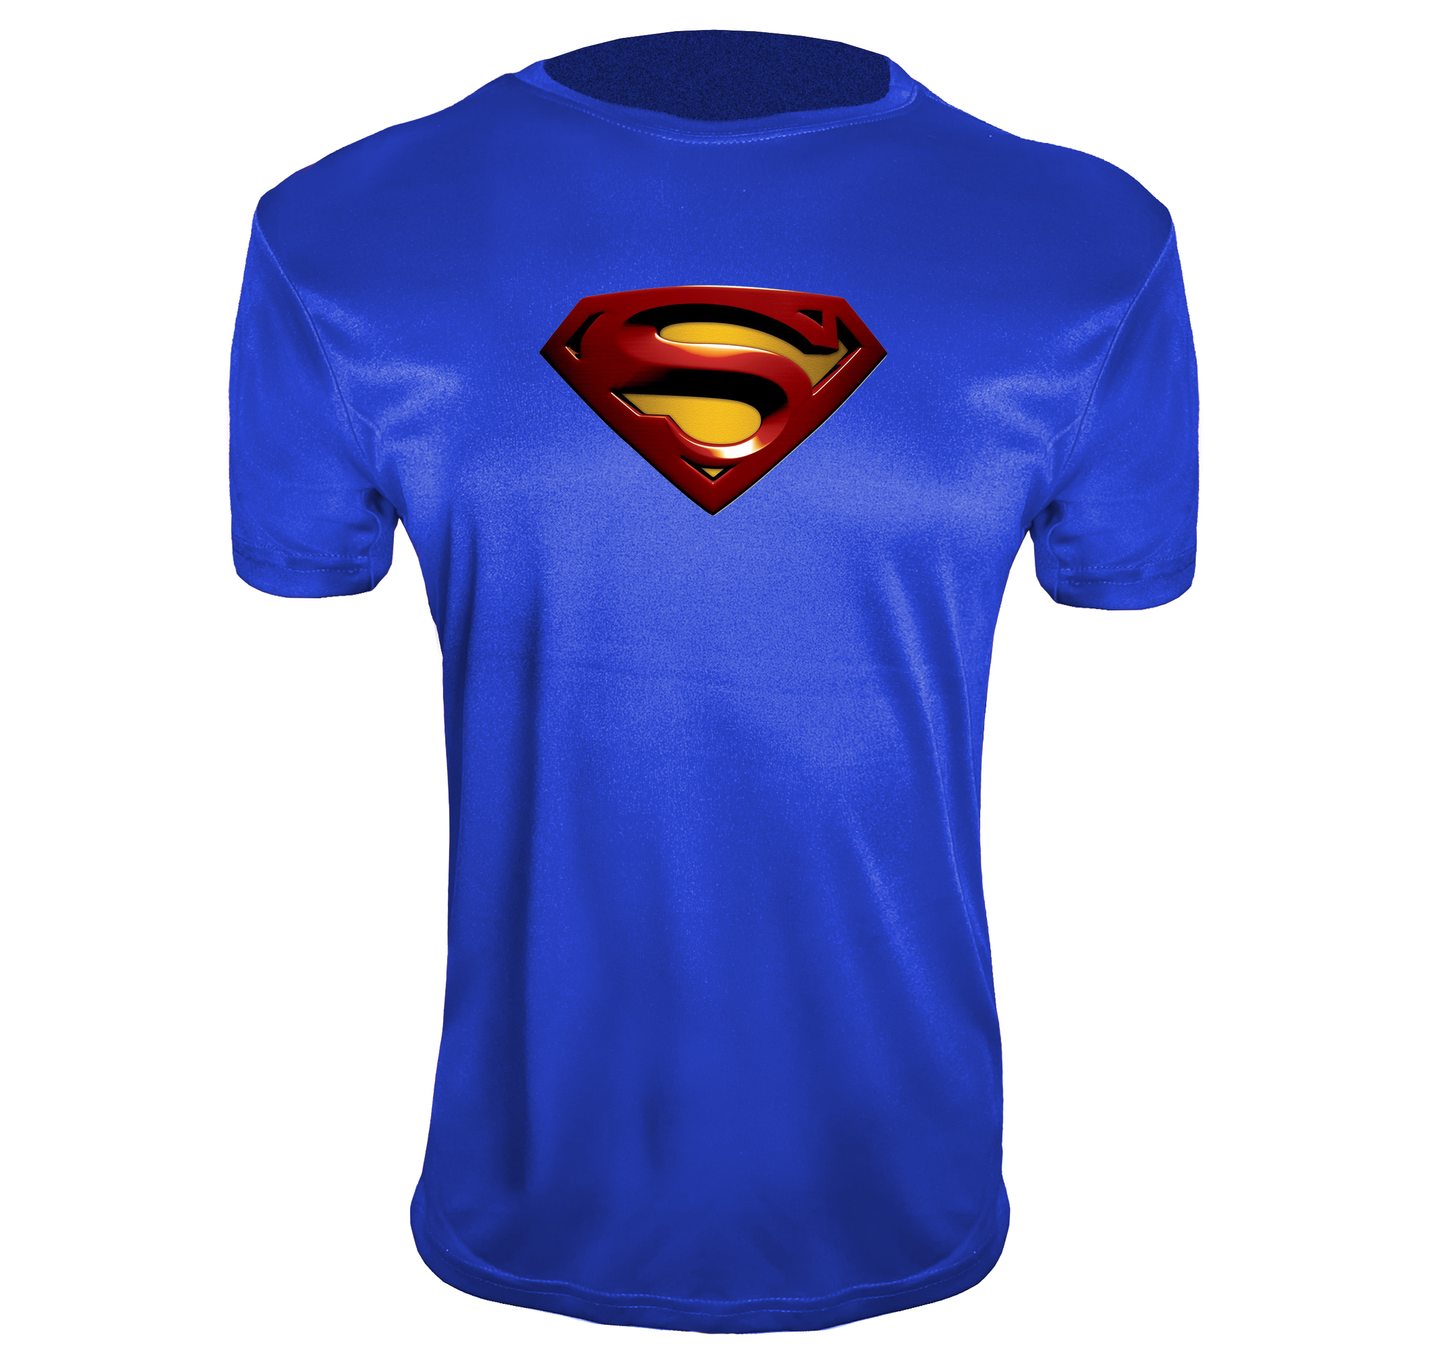 Youth Kids Superman Superhero Performance T-Shirt